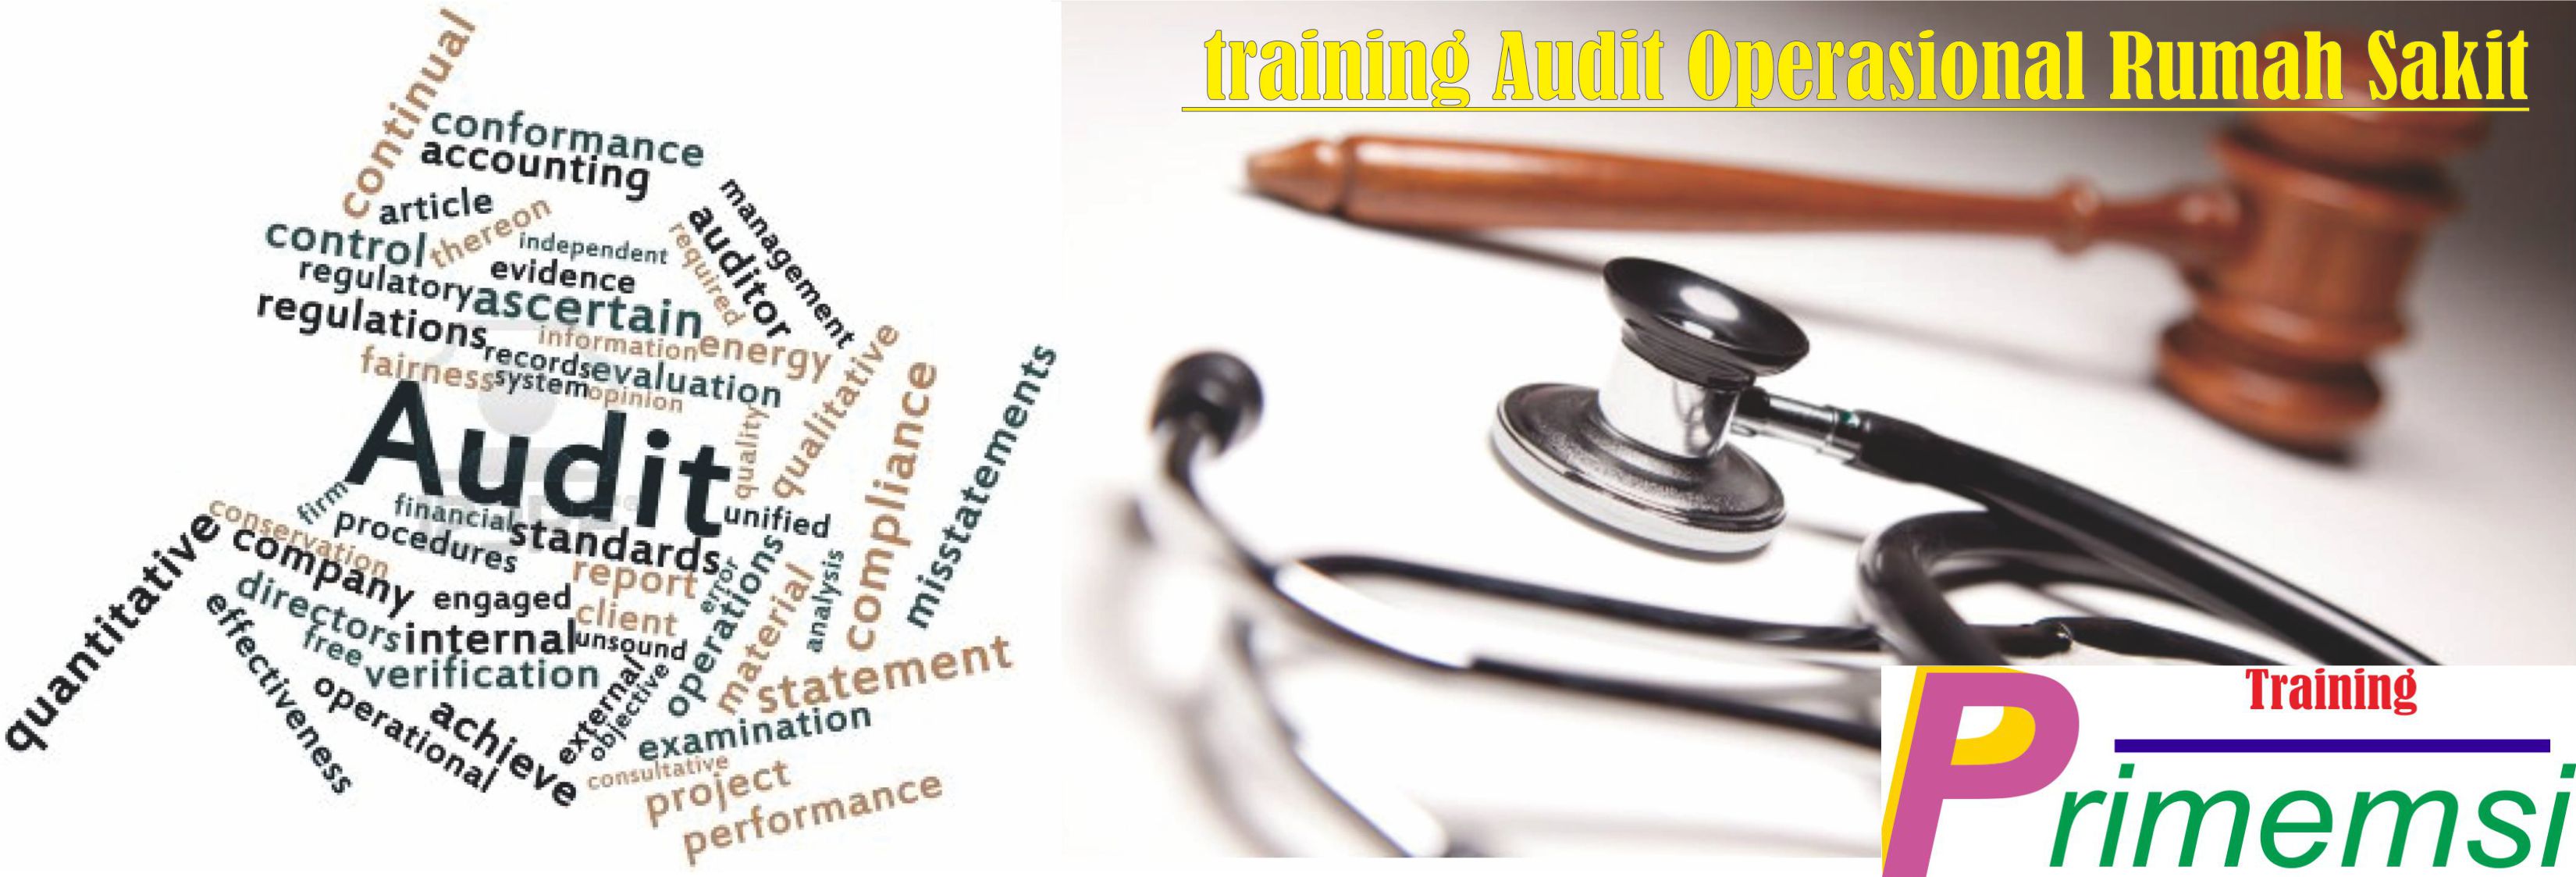 training audit operasional rumah sakit